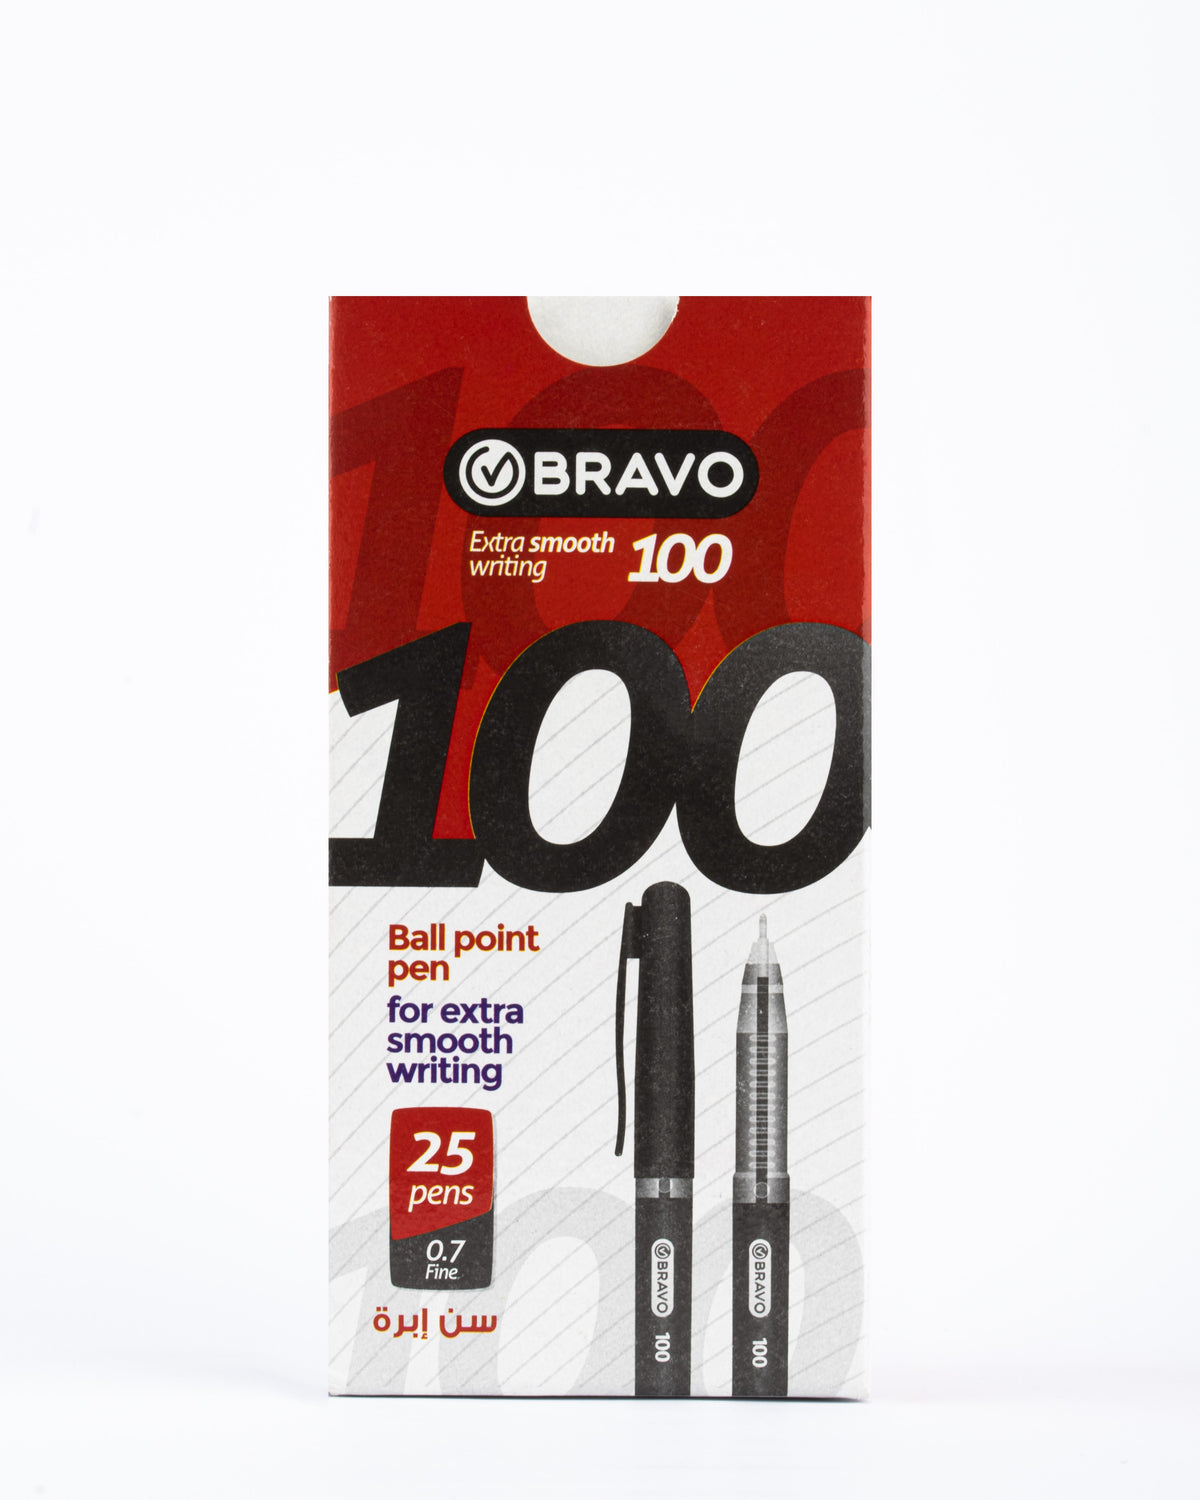 Ballpoint Pen Bravo 100 - 25 Pen - Black